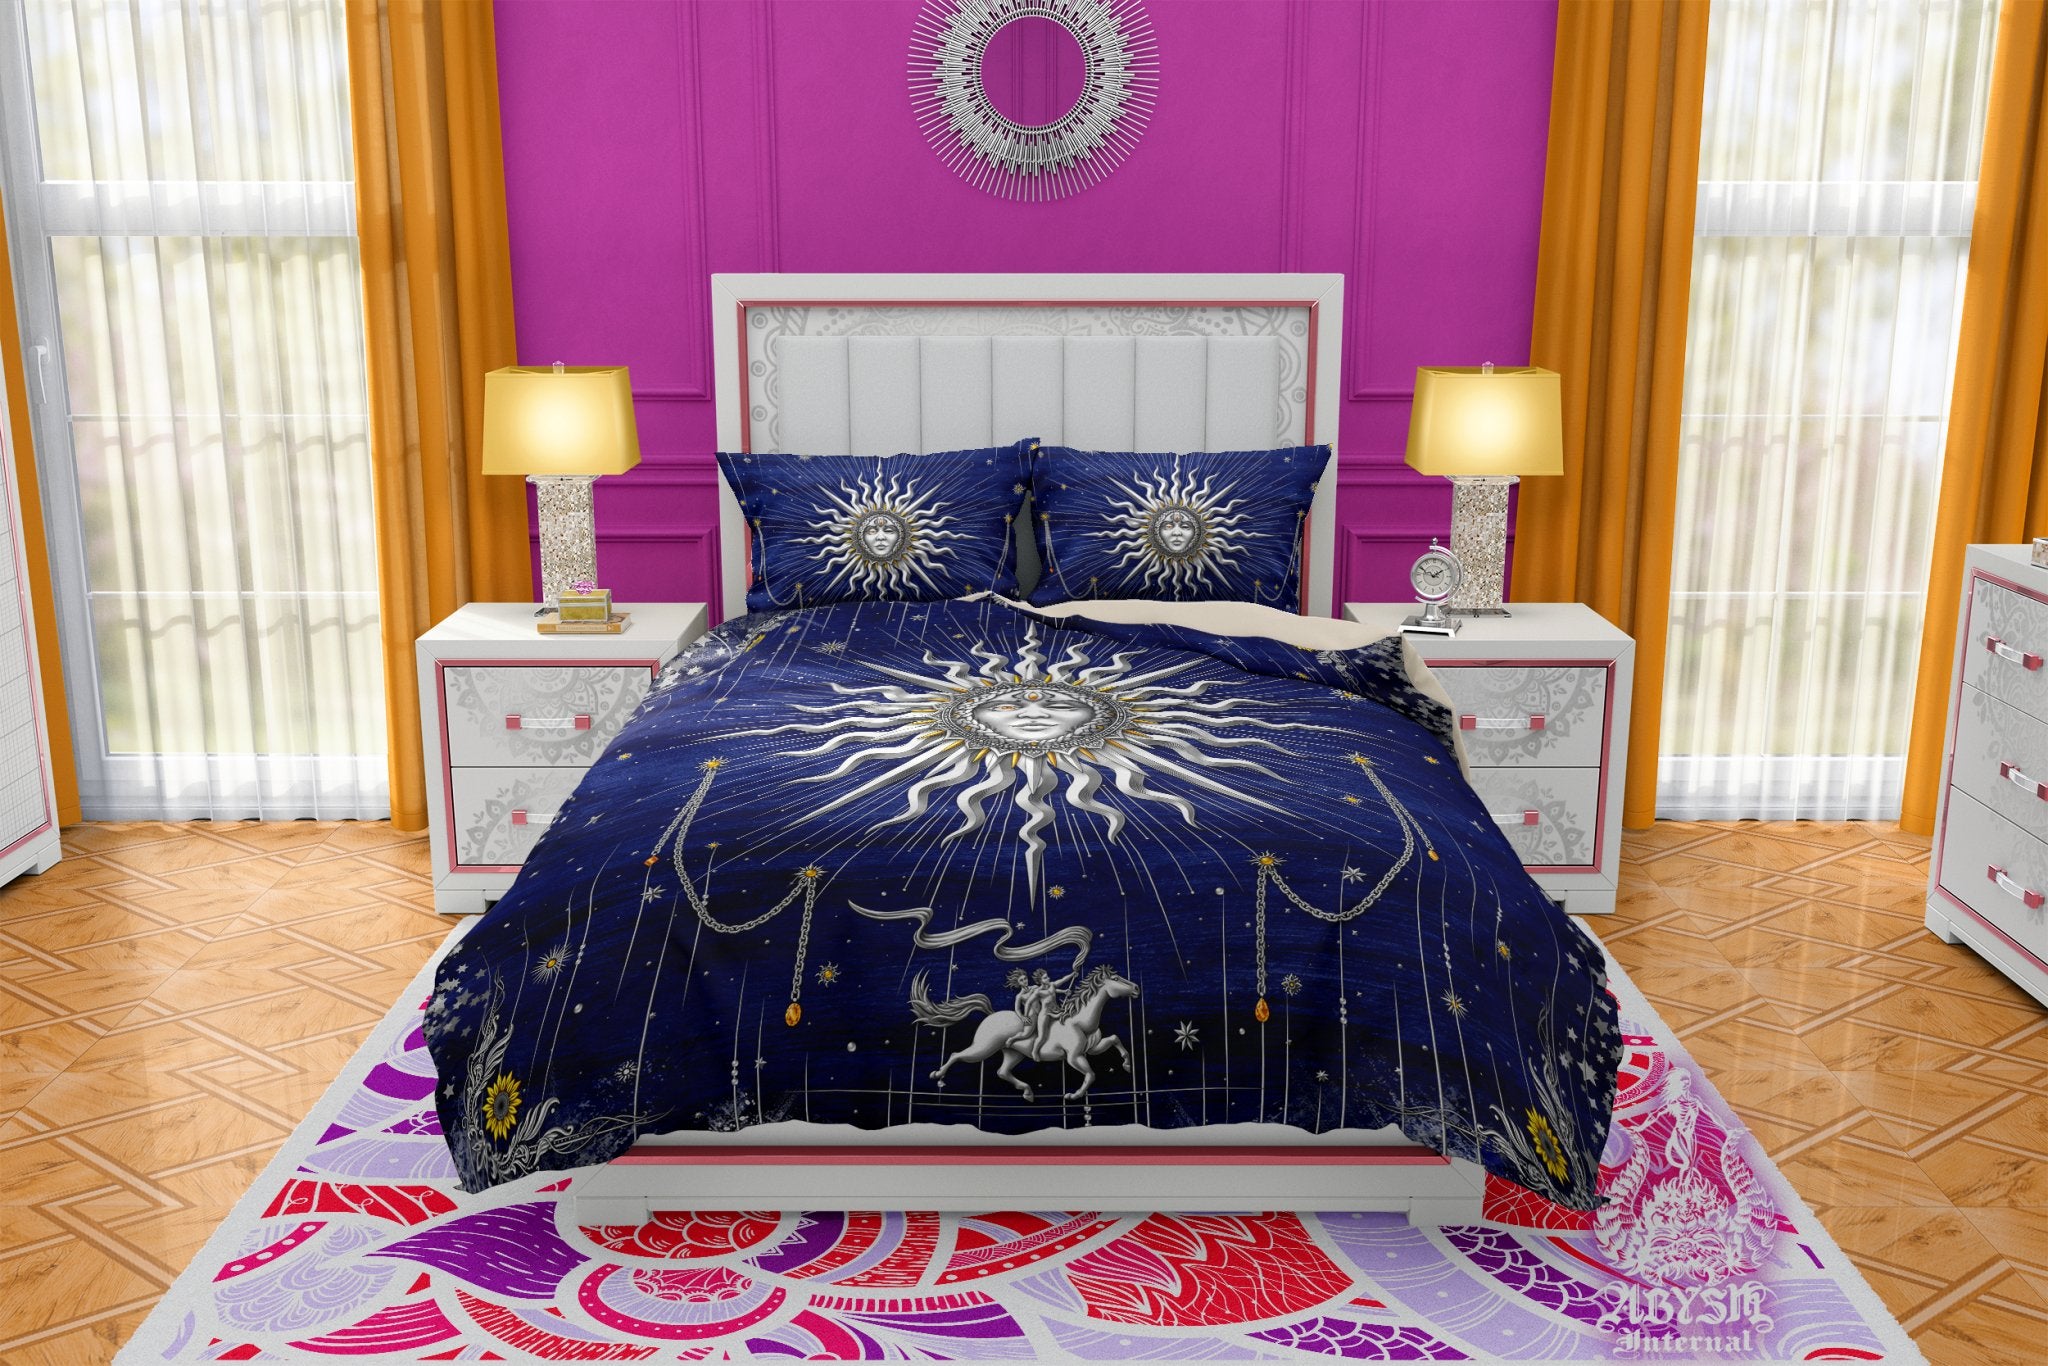 Silver Sun Duvet Cover, Bed Covering, Esoteric Comforter, Indie Bedroom Decor King, Queen & Twin Bedding Set - Boho Tarot Arcana Art, 7 Colors - Abysm Internal